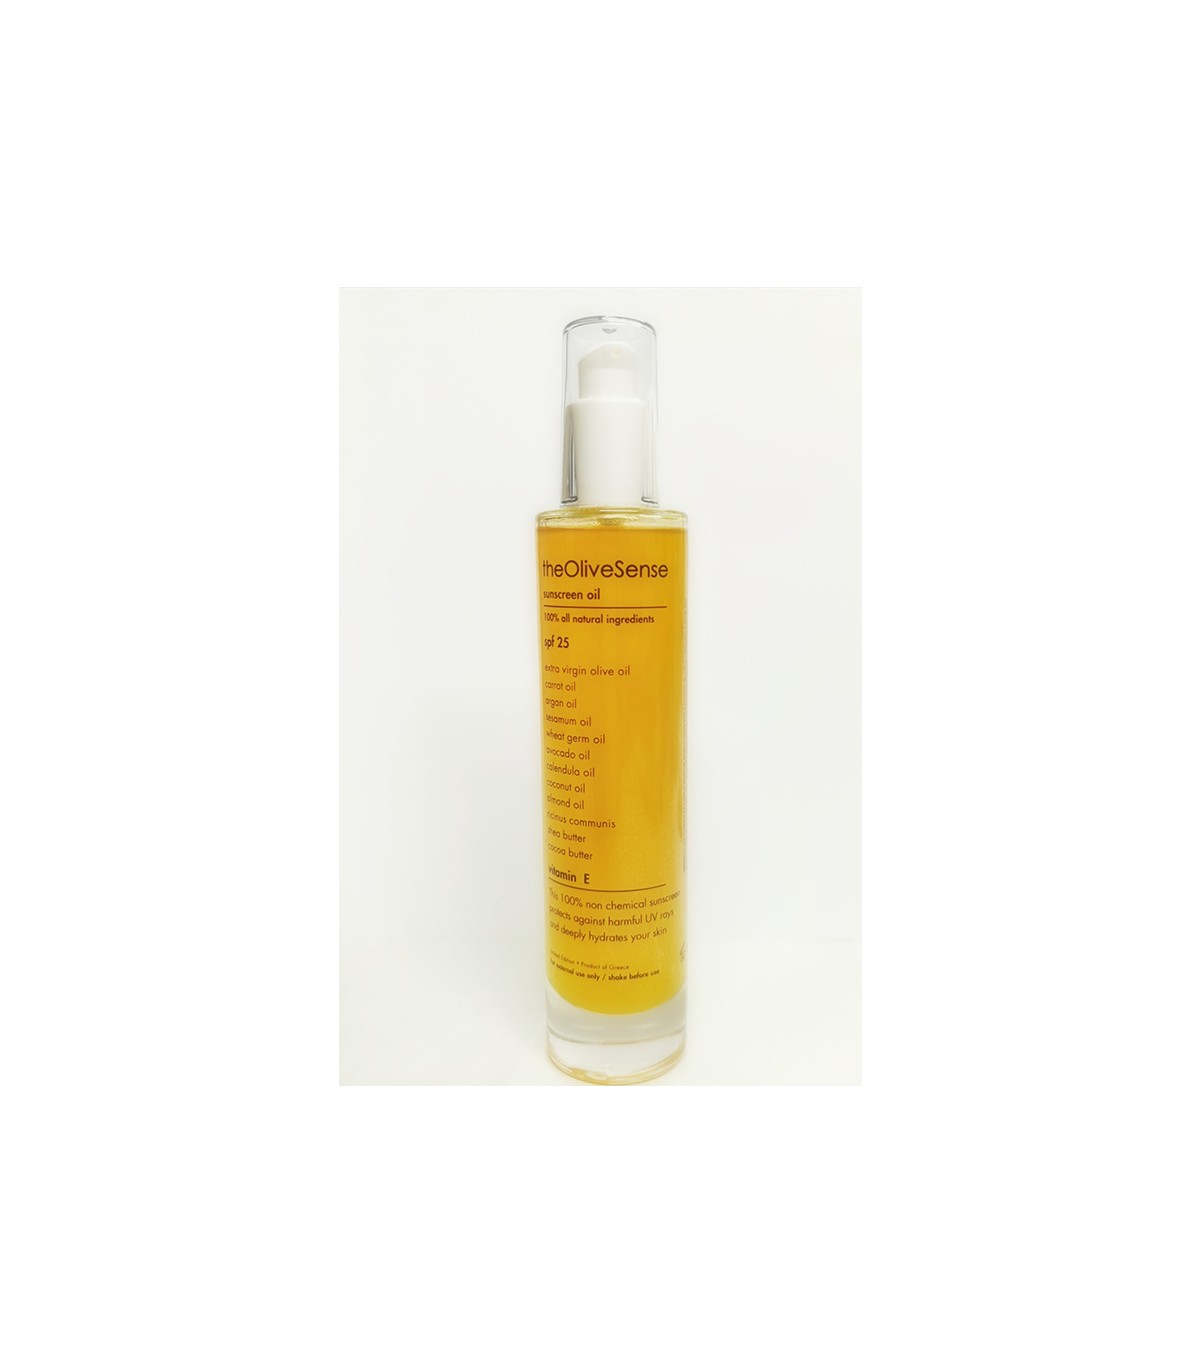 TheOliveSense sunscreen oil with vitamin E, 100ml